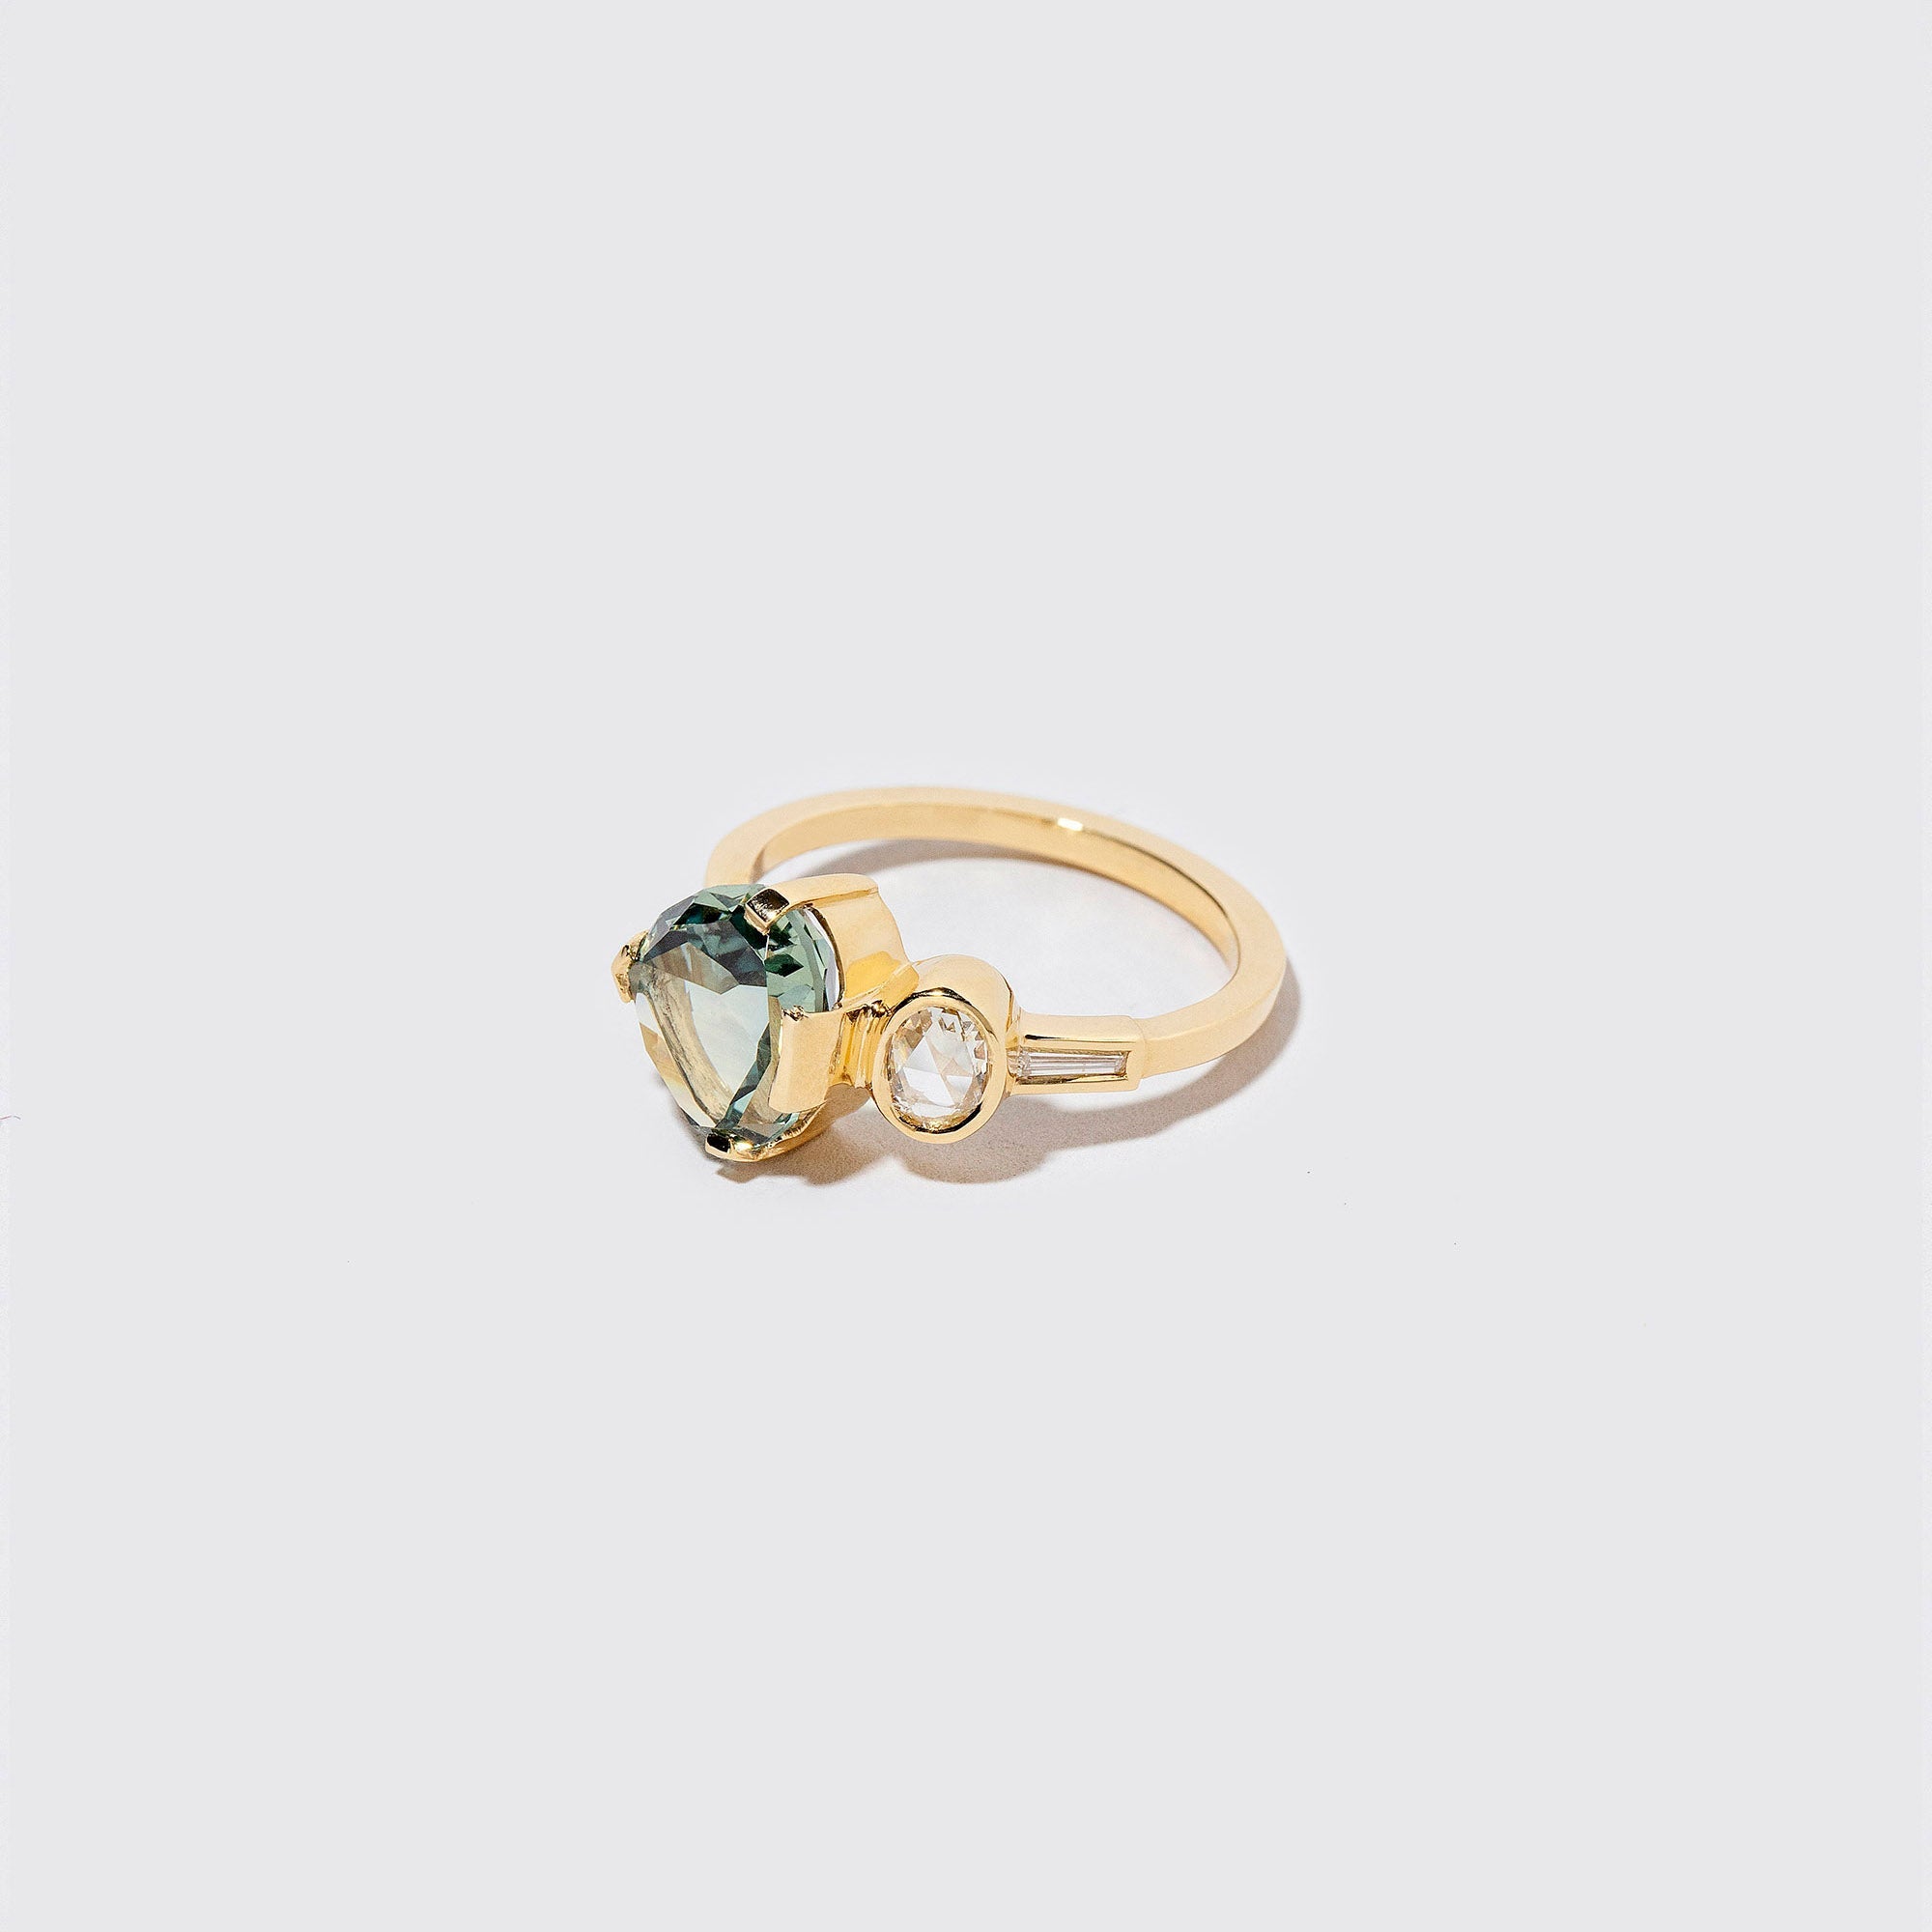 product_details:: Xanadu Ring on light color background.